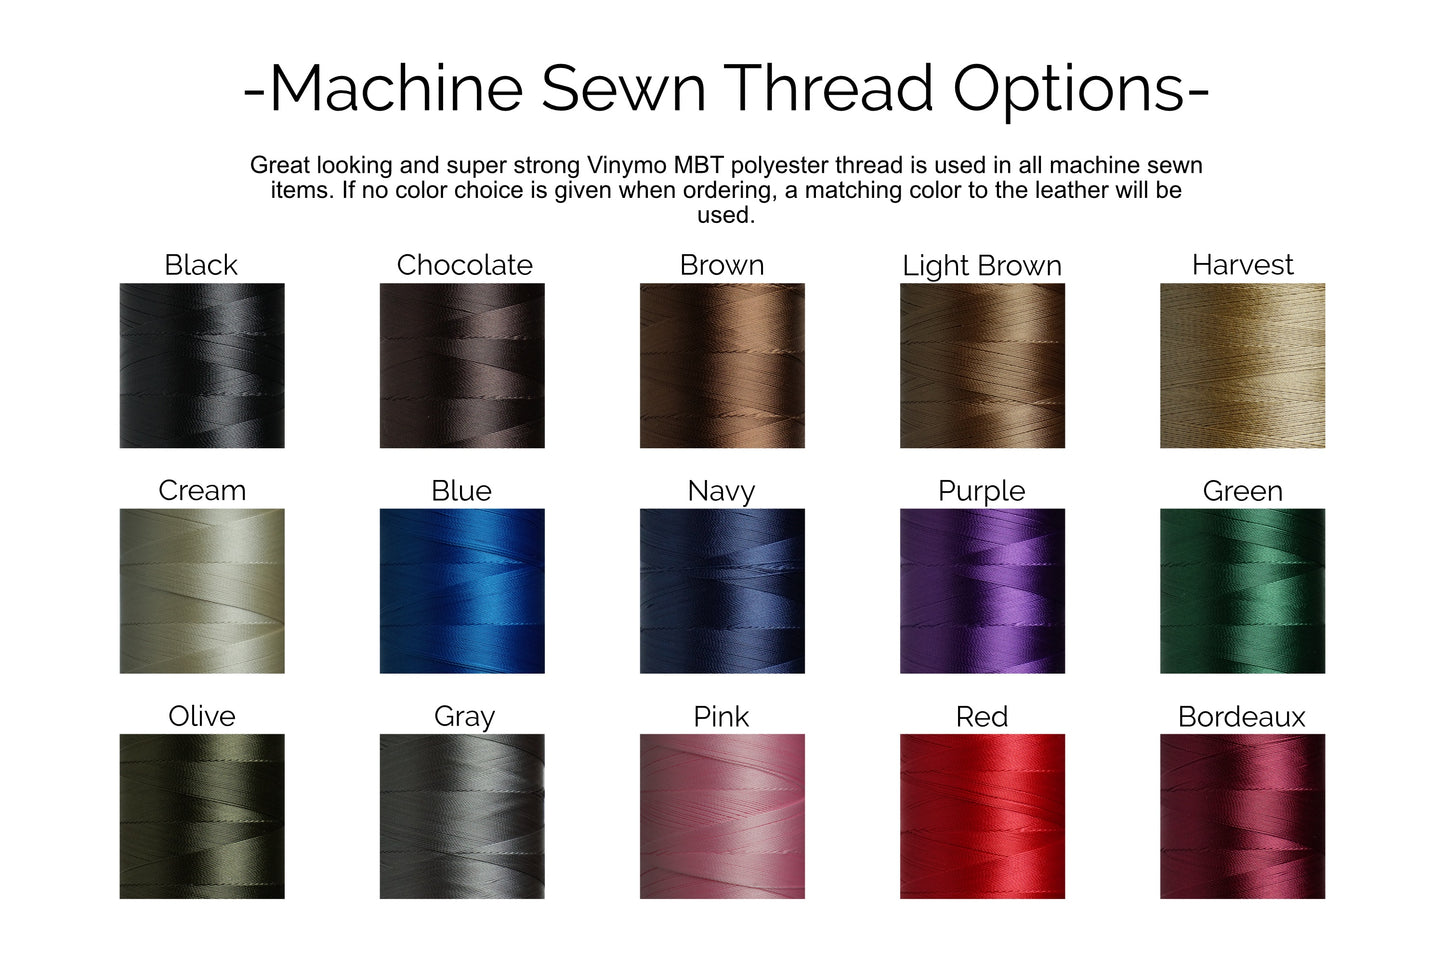 Standard machine sewn thread color options